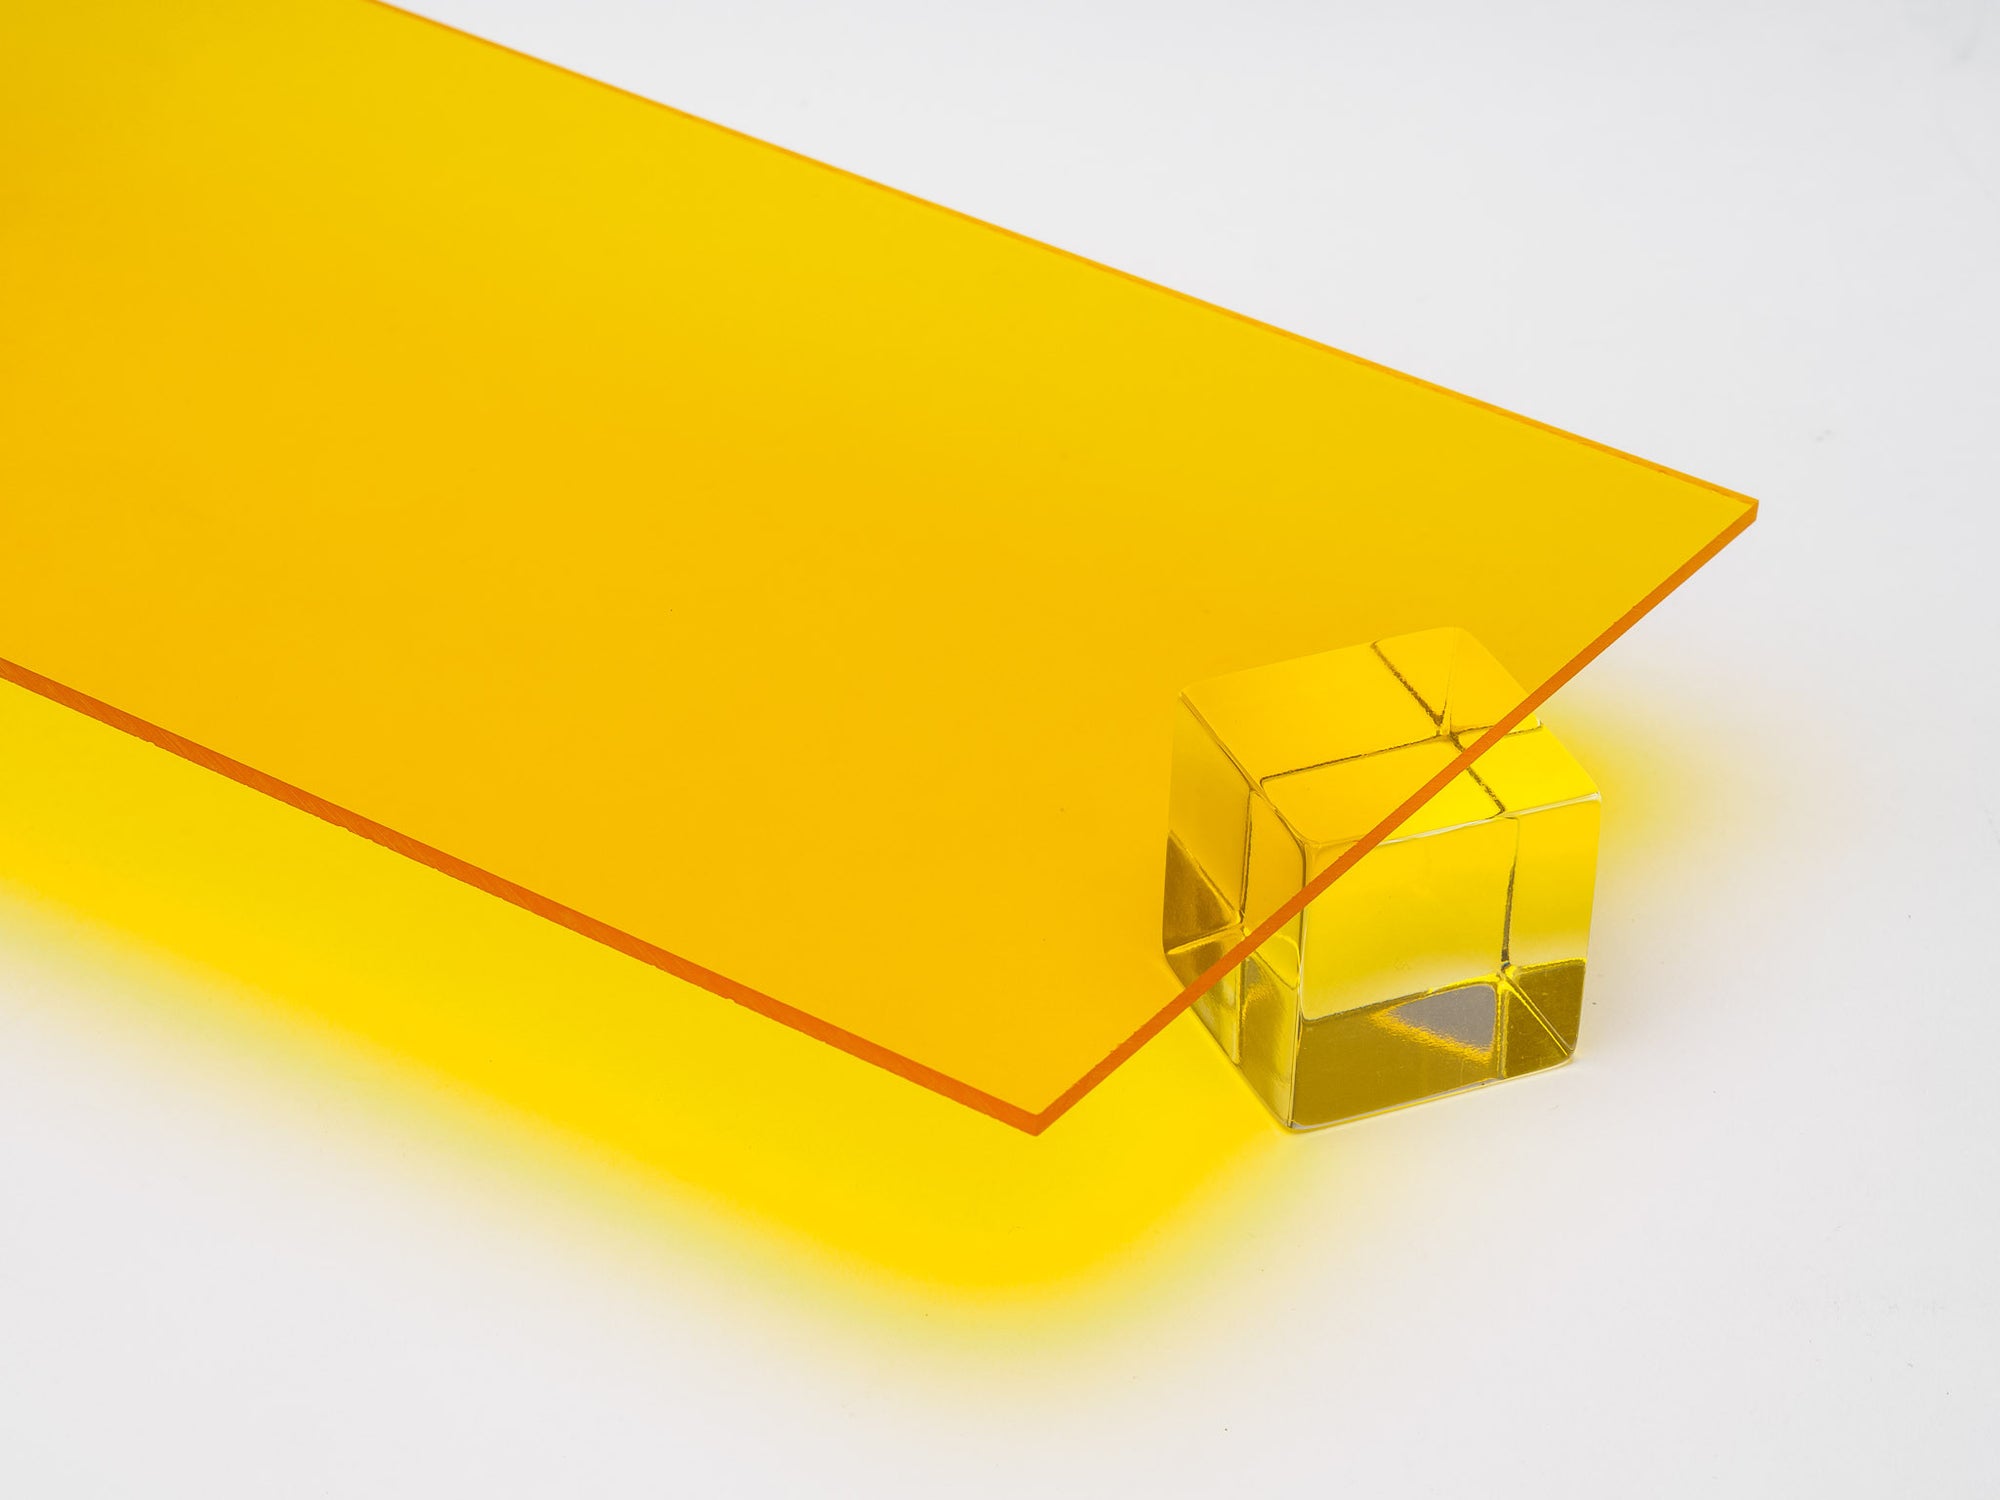 Yellow Transparent Acrylic Plexiglass Sheet, Top view